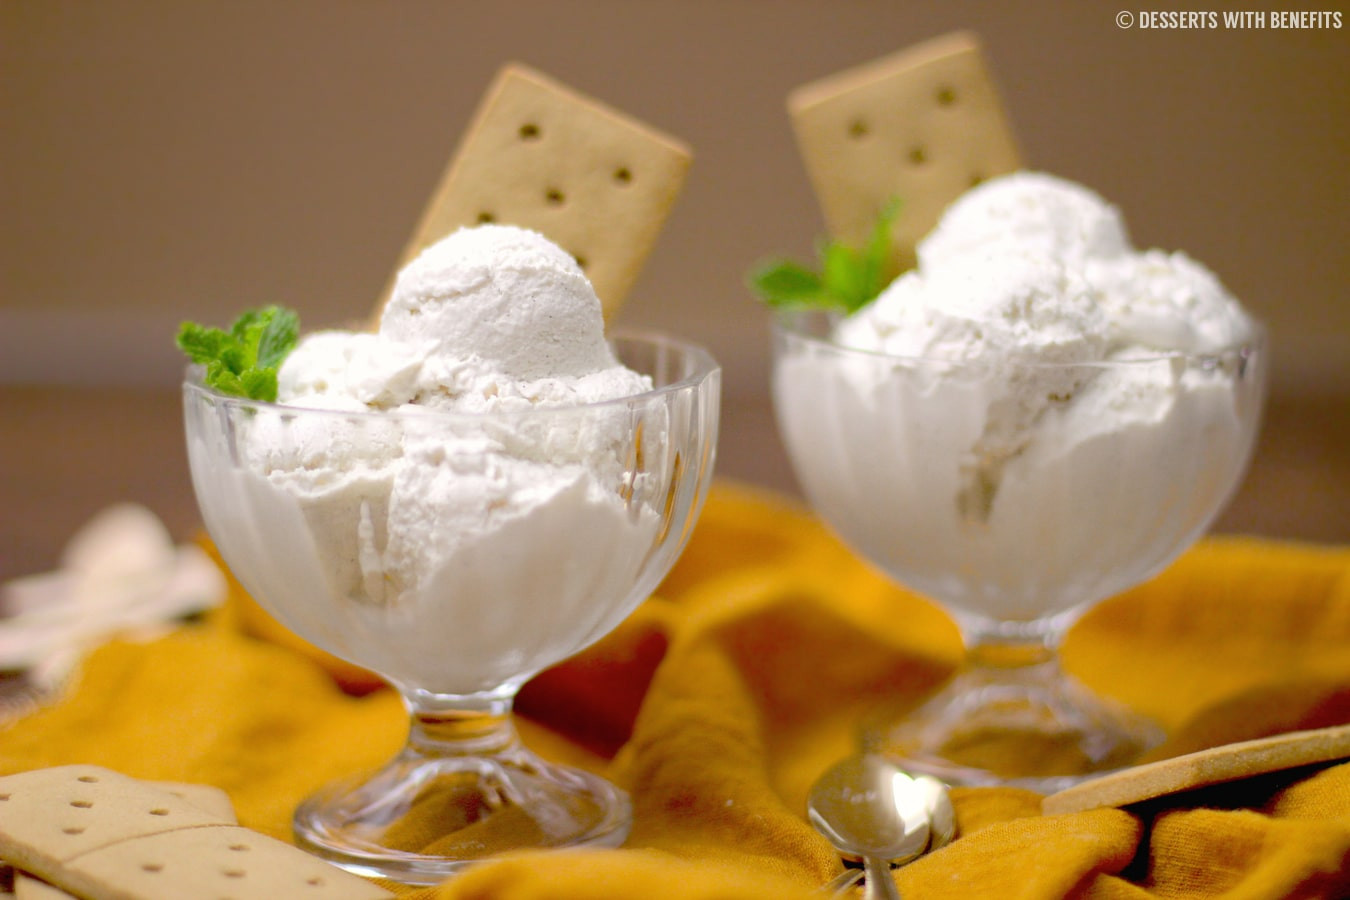 Healthy Sugar Free Desserts
 Healthy Cheesecake Ice Cream Desserts with Benefits